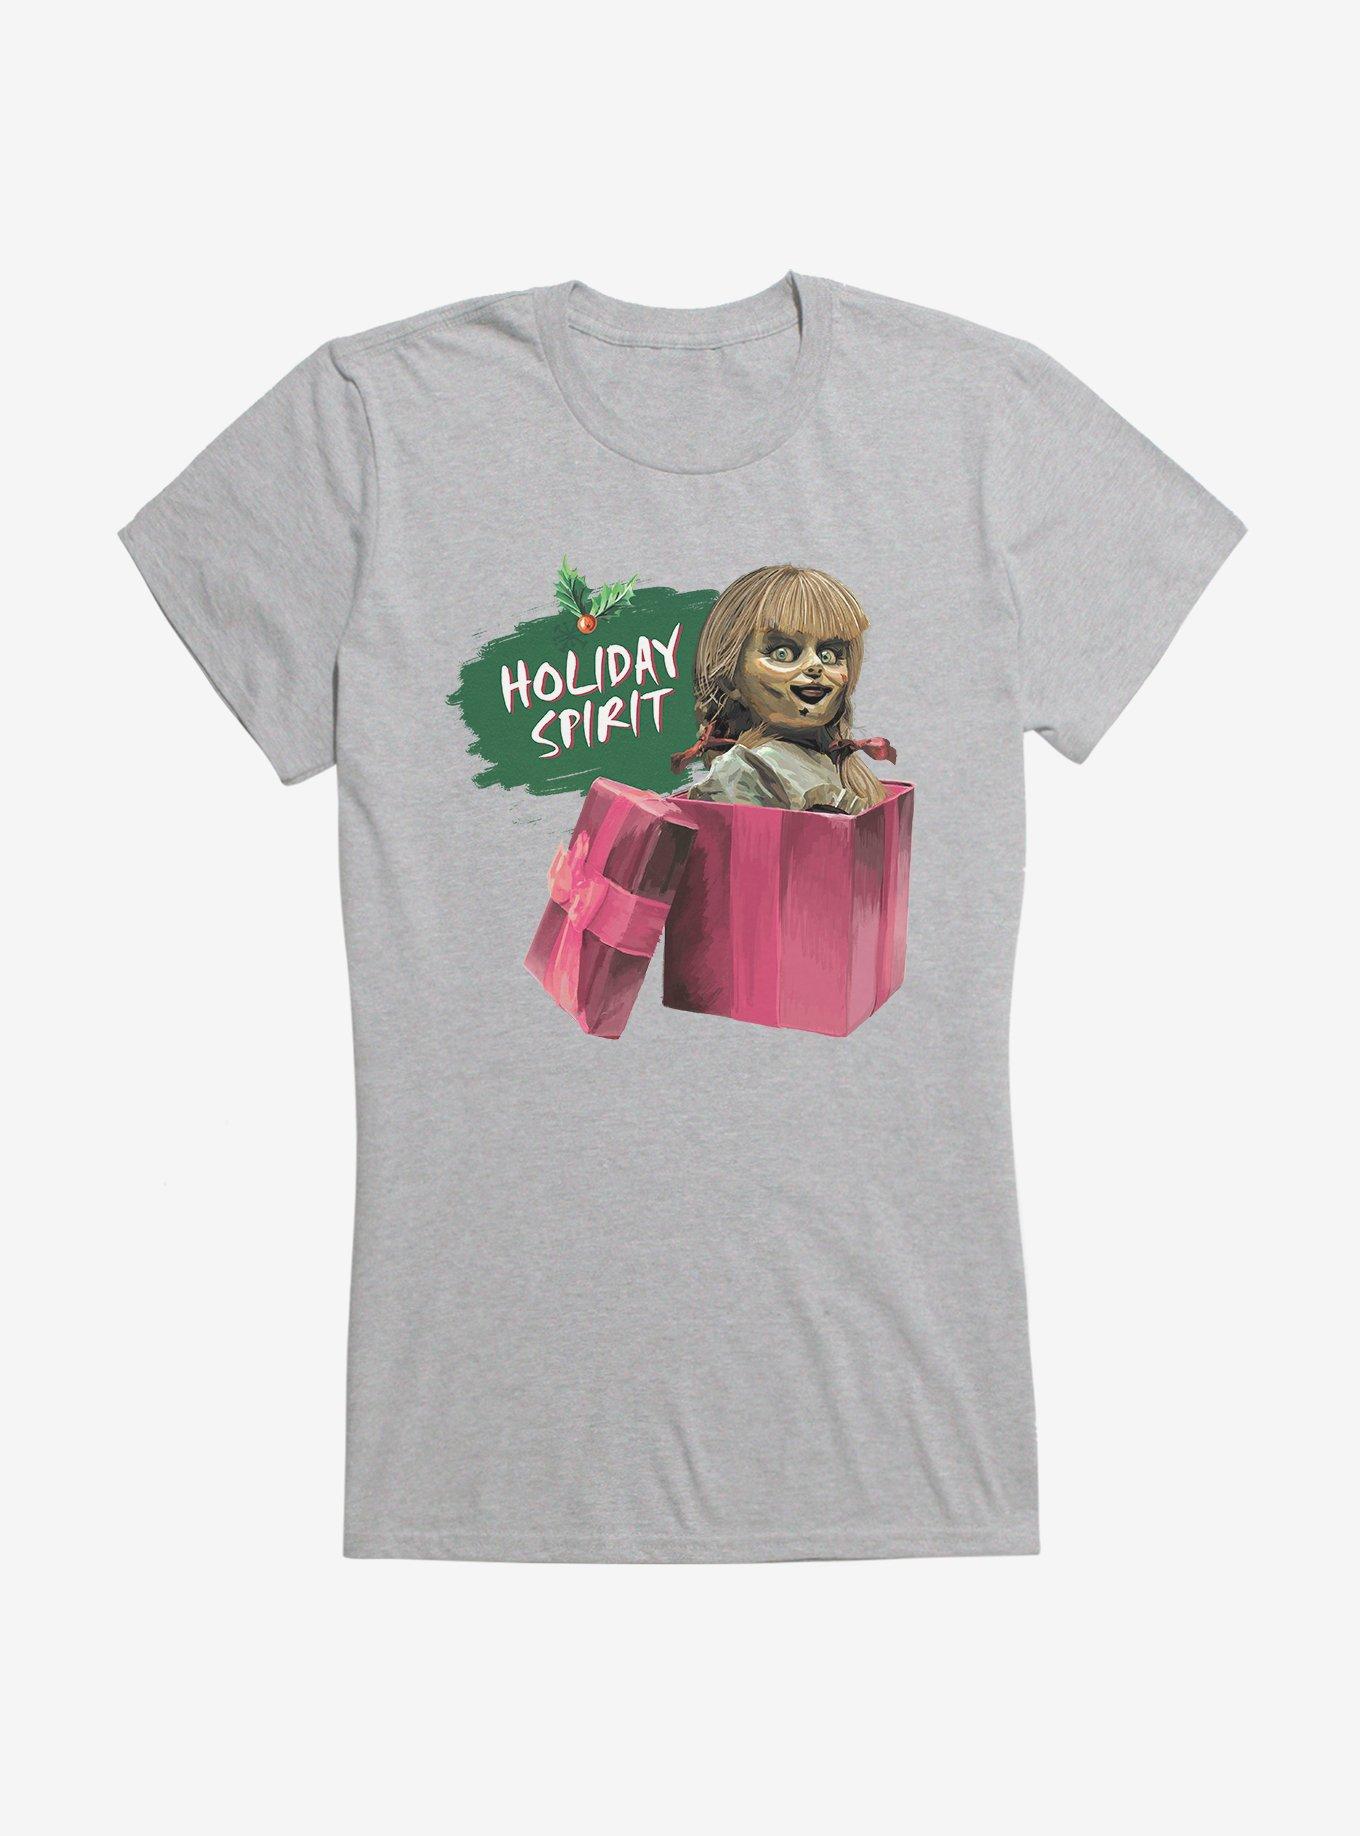 Annabelle Holiday Spirit Girls T-Shirt, HEATHER, hi-res